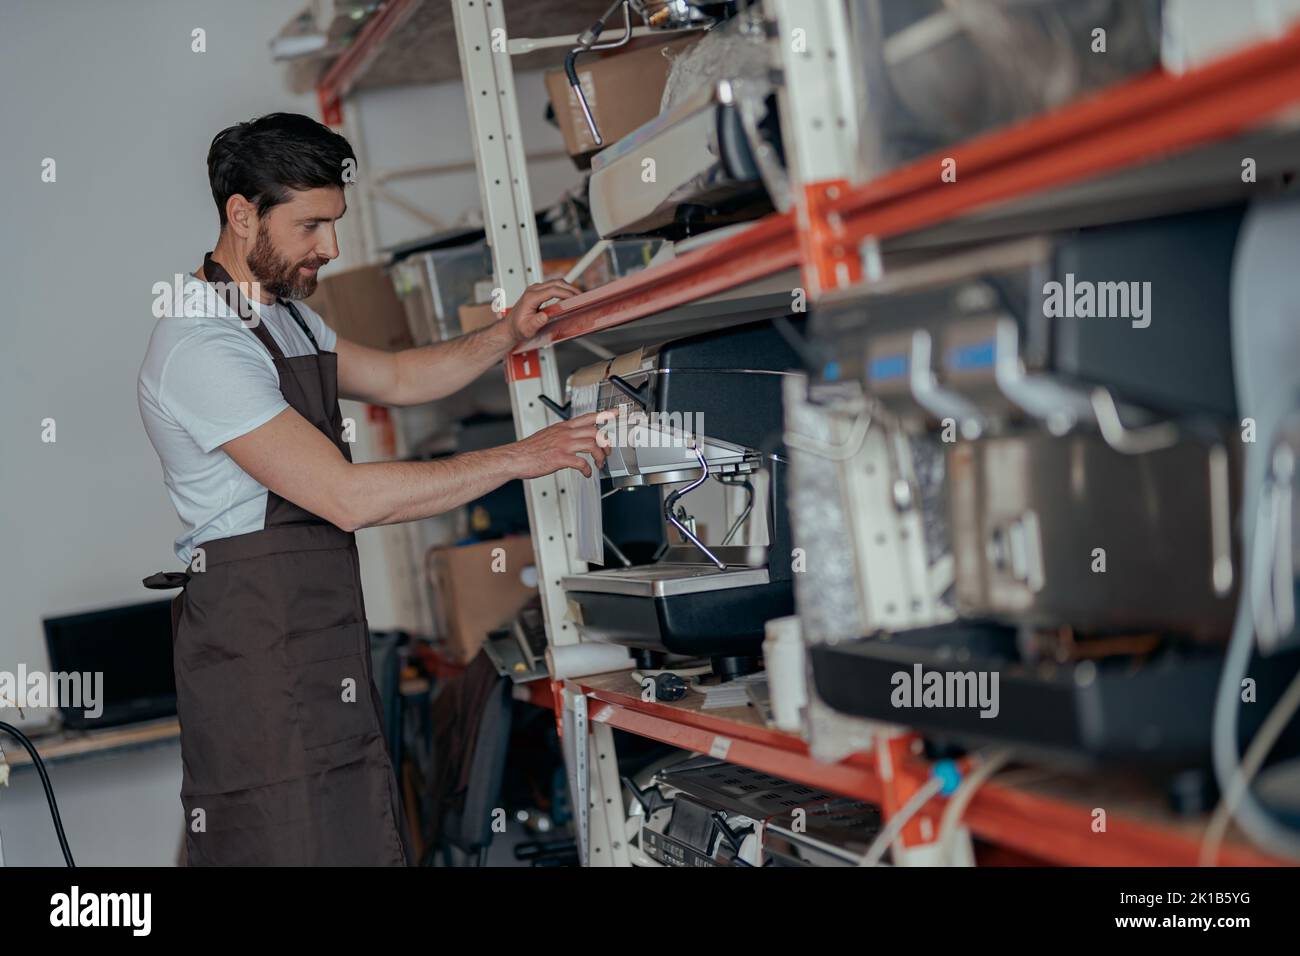 Man worker in uniform inspecting coffee machine in own workshop Stock Photo